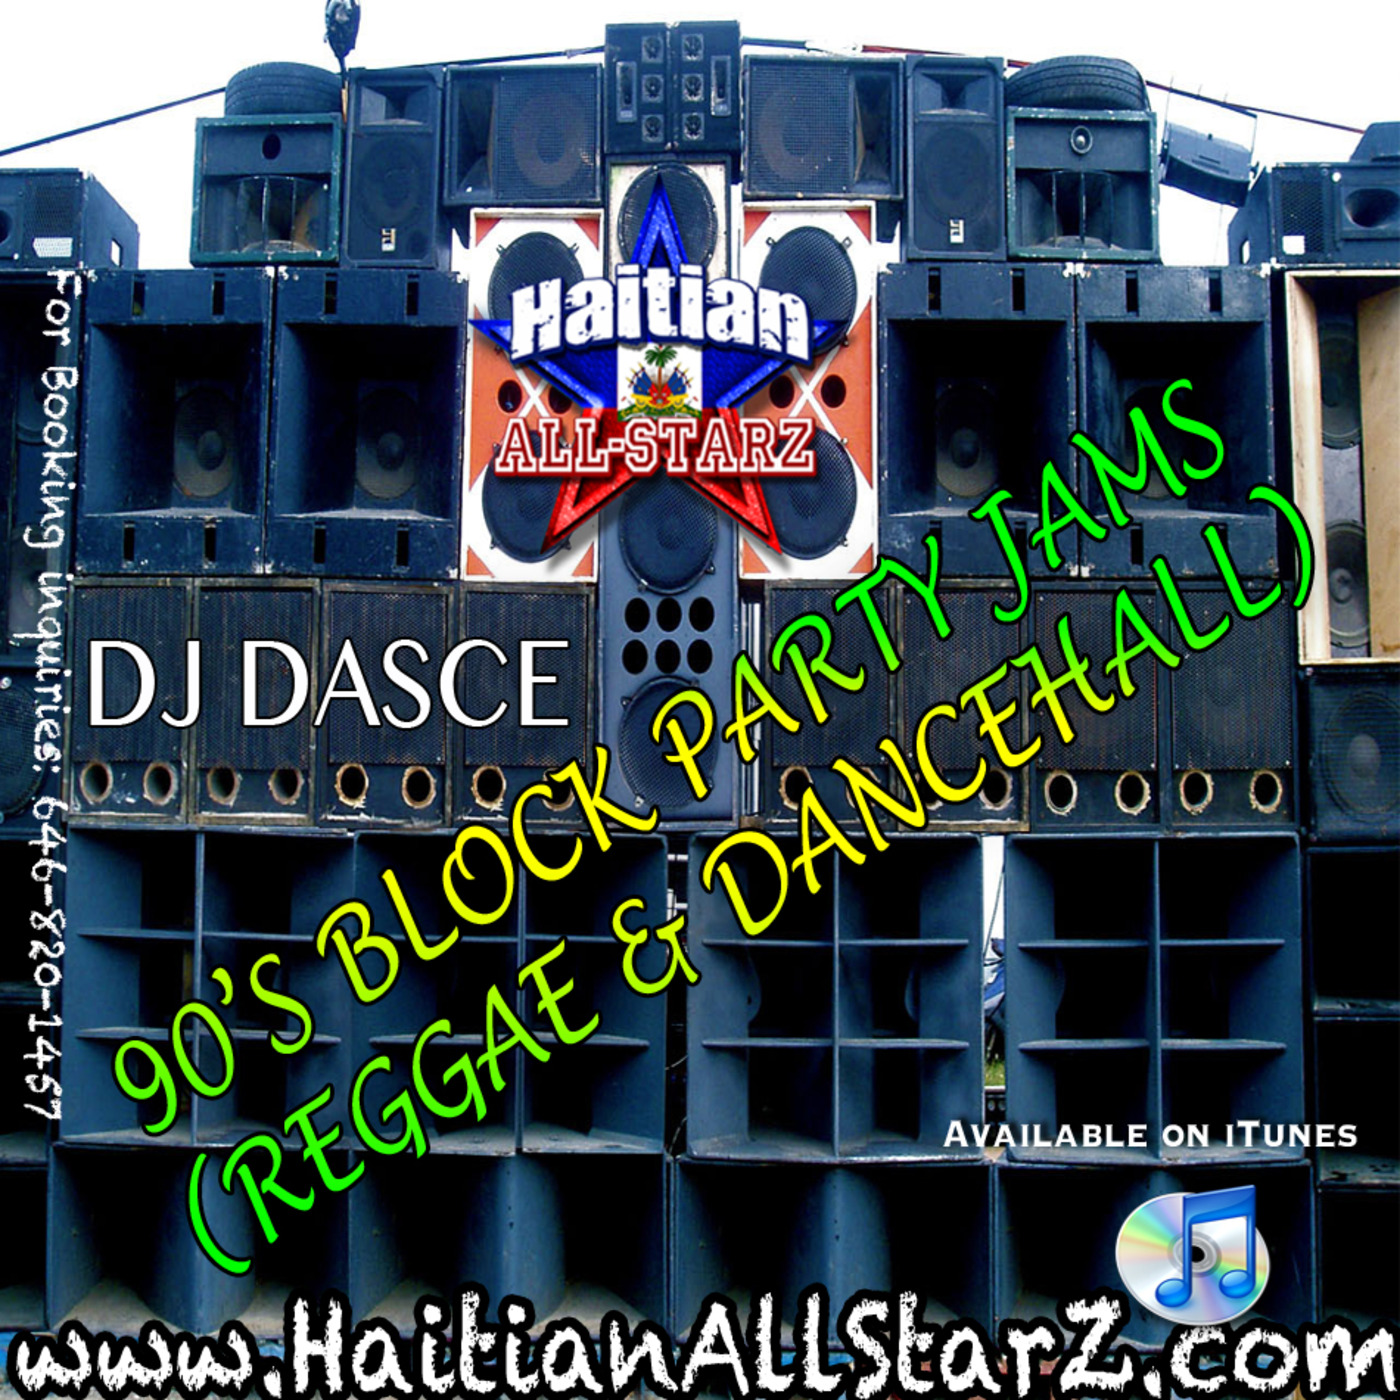 90's Block Party Jams (Reggae / Dancehall) - DJ Dasce {Haitian All-StarZ DJs}